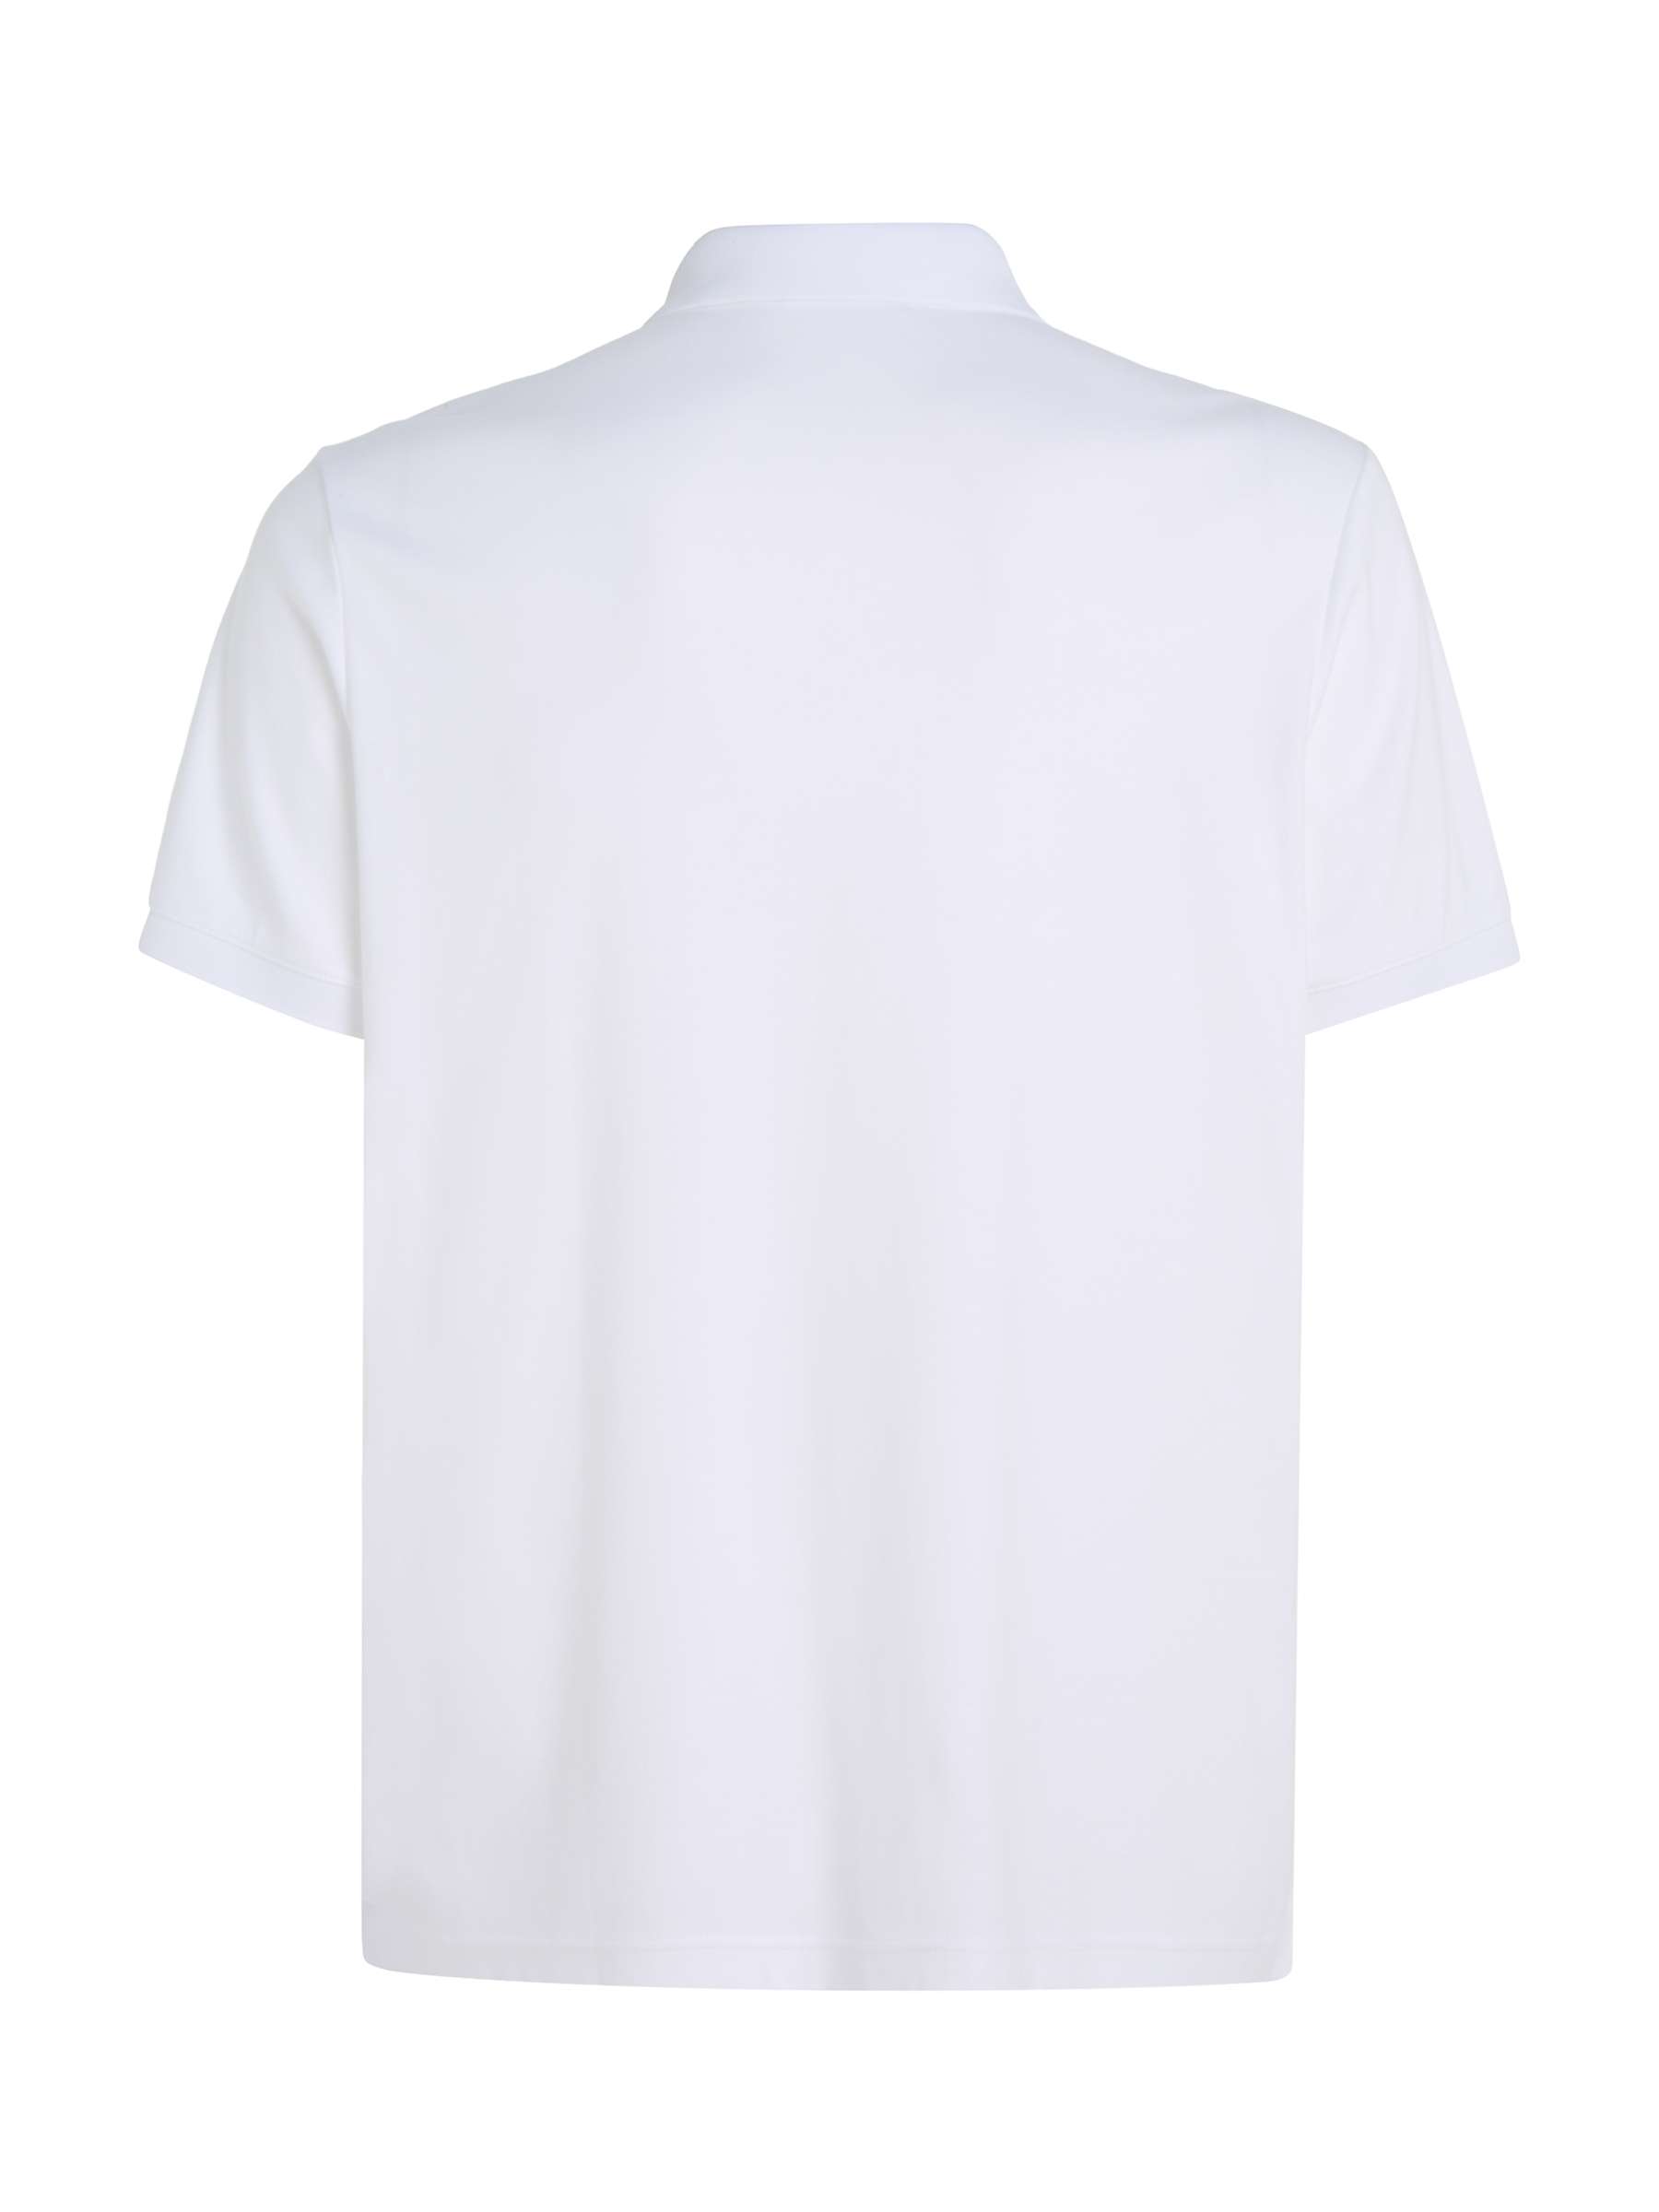 Buy Calvin Klein Cotton Zip Polo Top, Bright White Online at johnlewis.com